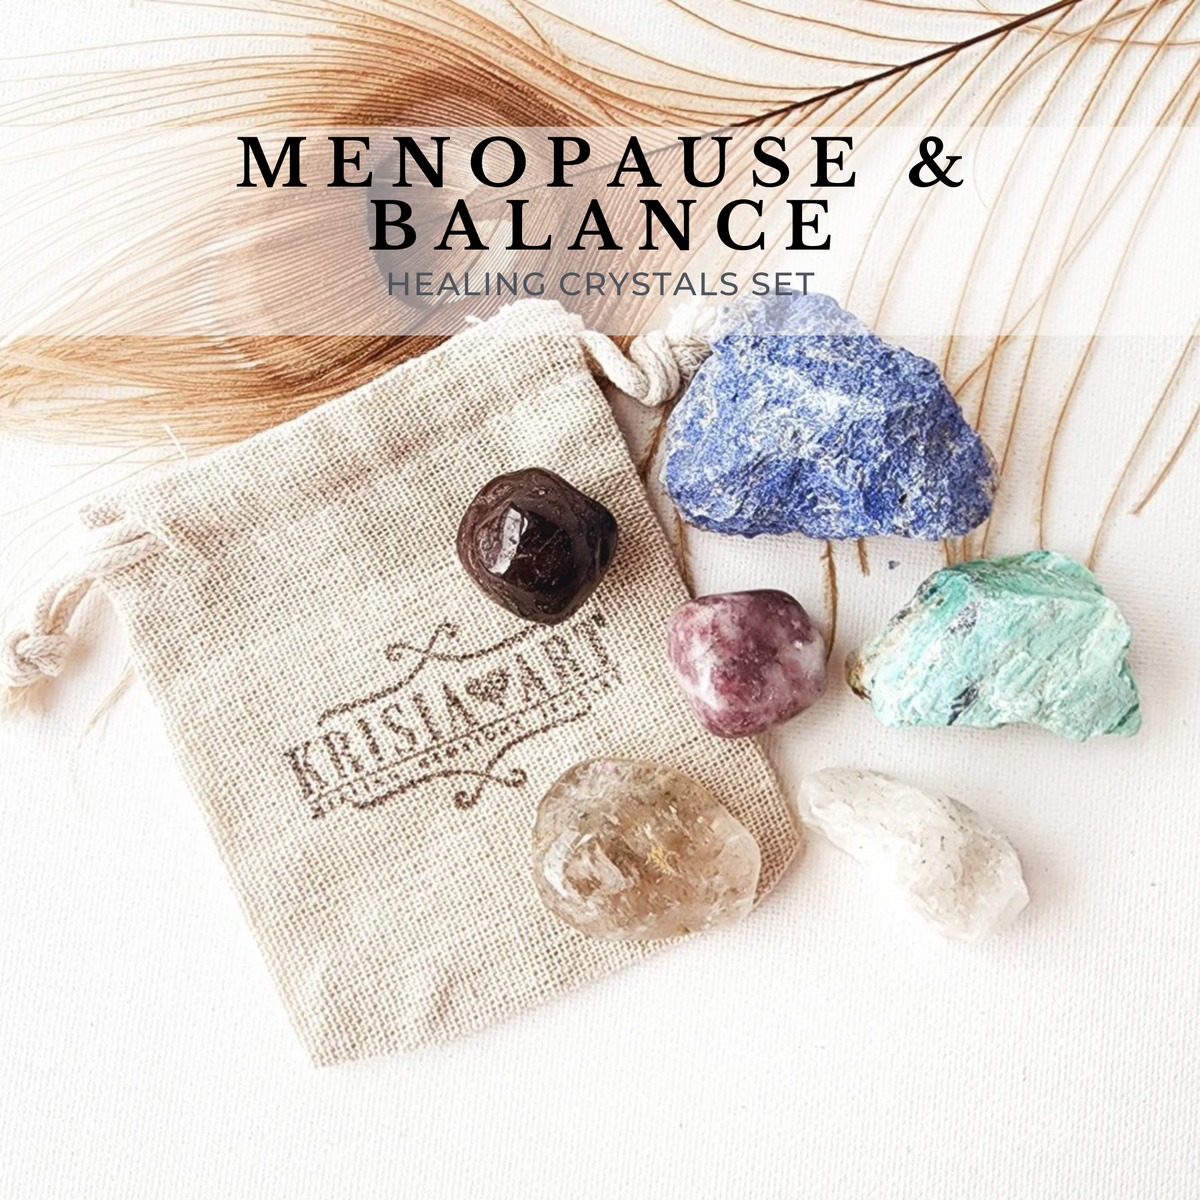 MENOPAUSE & BALANCE crystal set for hormone balancing, menopause symptoms relief, mood swings. Dumortierite, Lodolite, Red Garnet, Turquoise, Lepidolite, Moonstone. 